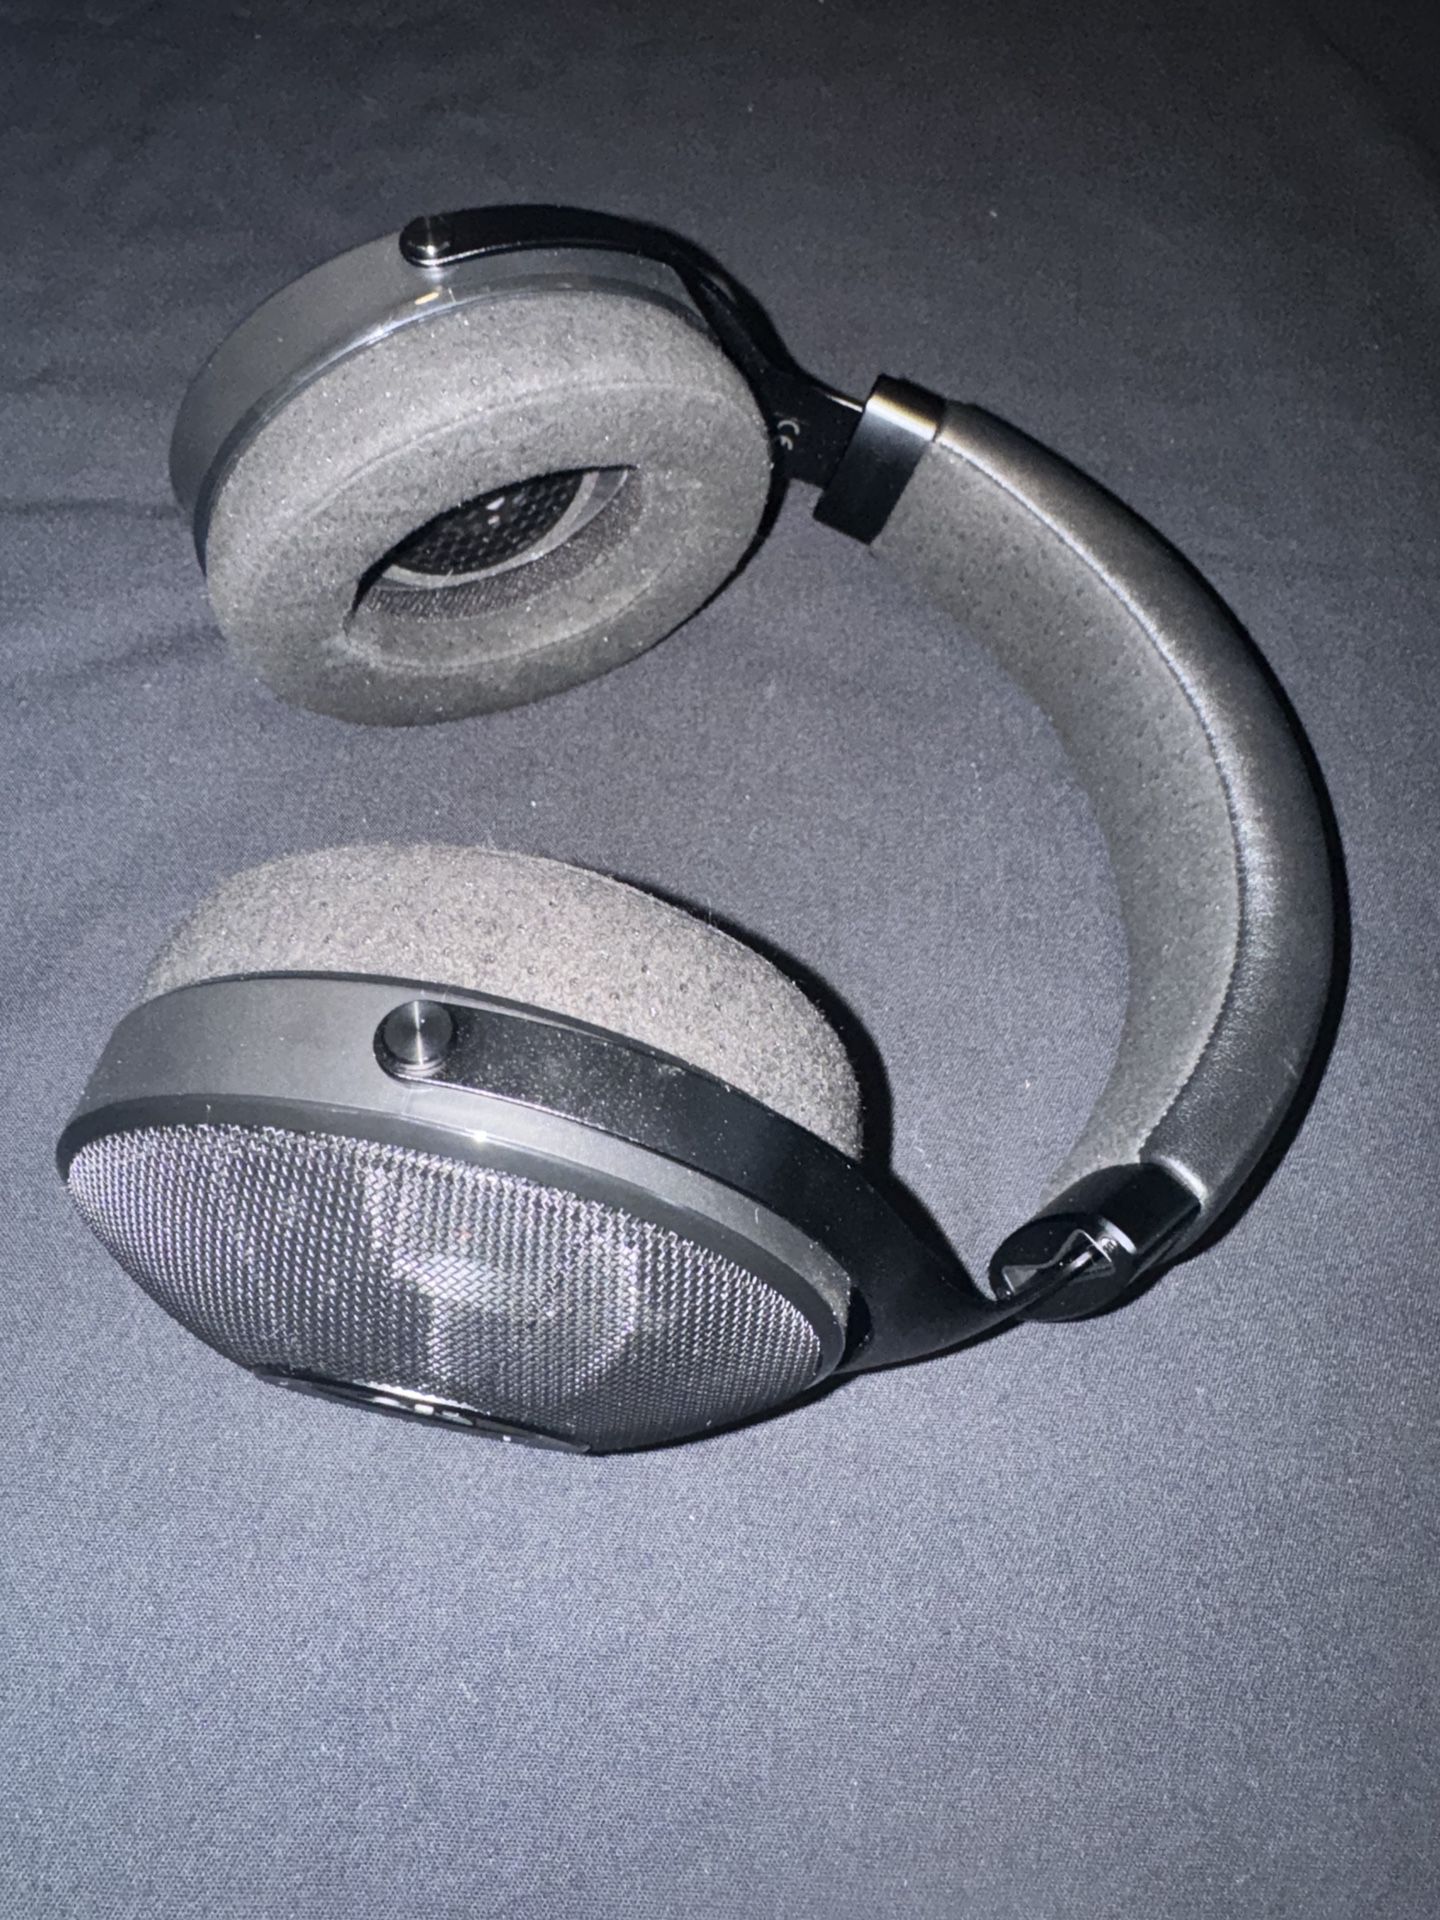 Massdrop X Focal Elex Headphones - Black W/ All Original Packaging & Items